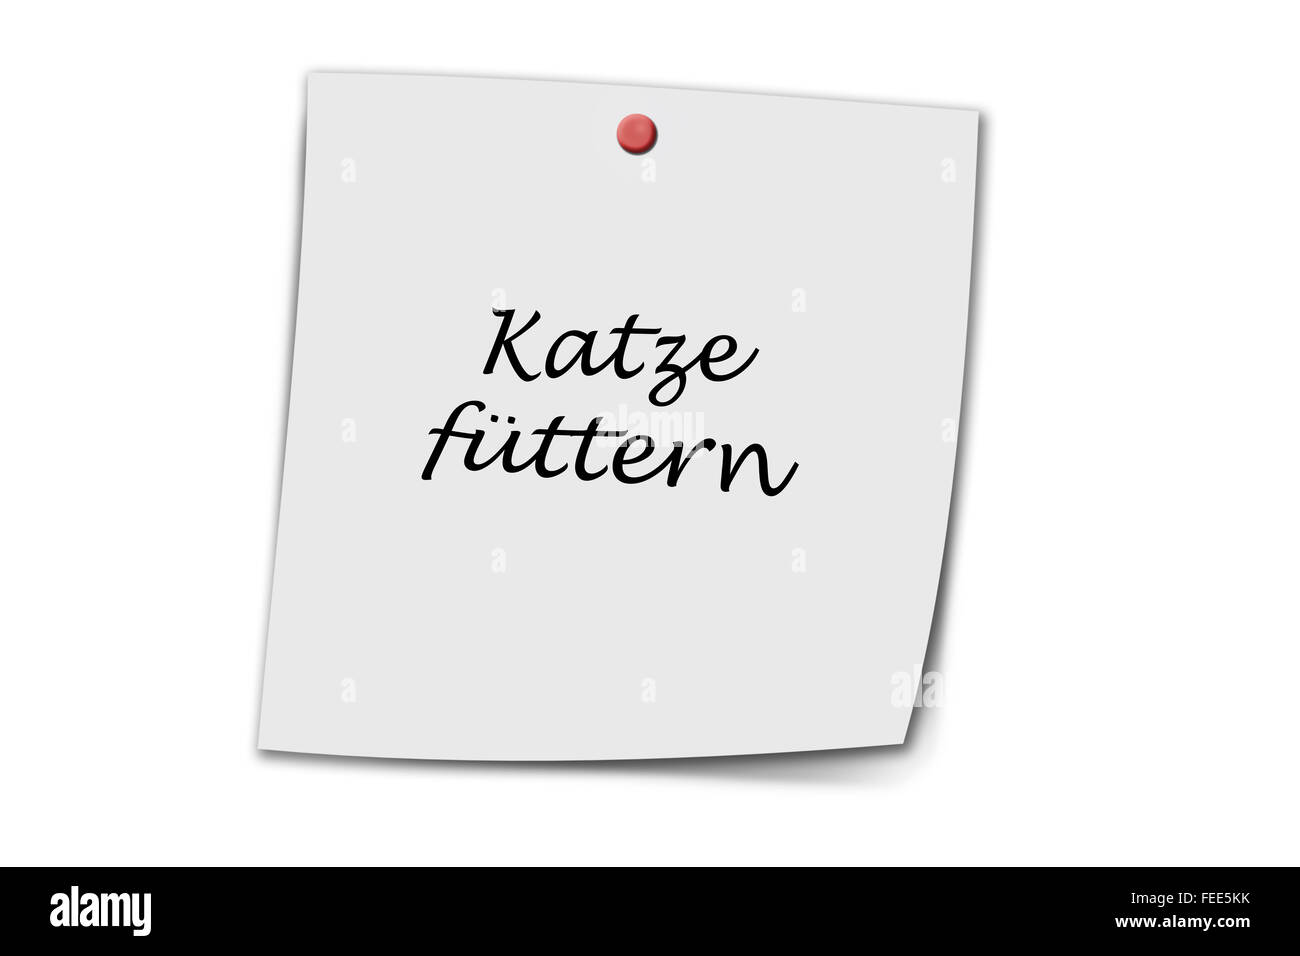 Katze füttern (German feed cat) written on a memo isolated on white Stock Photo